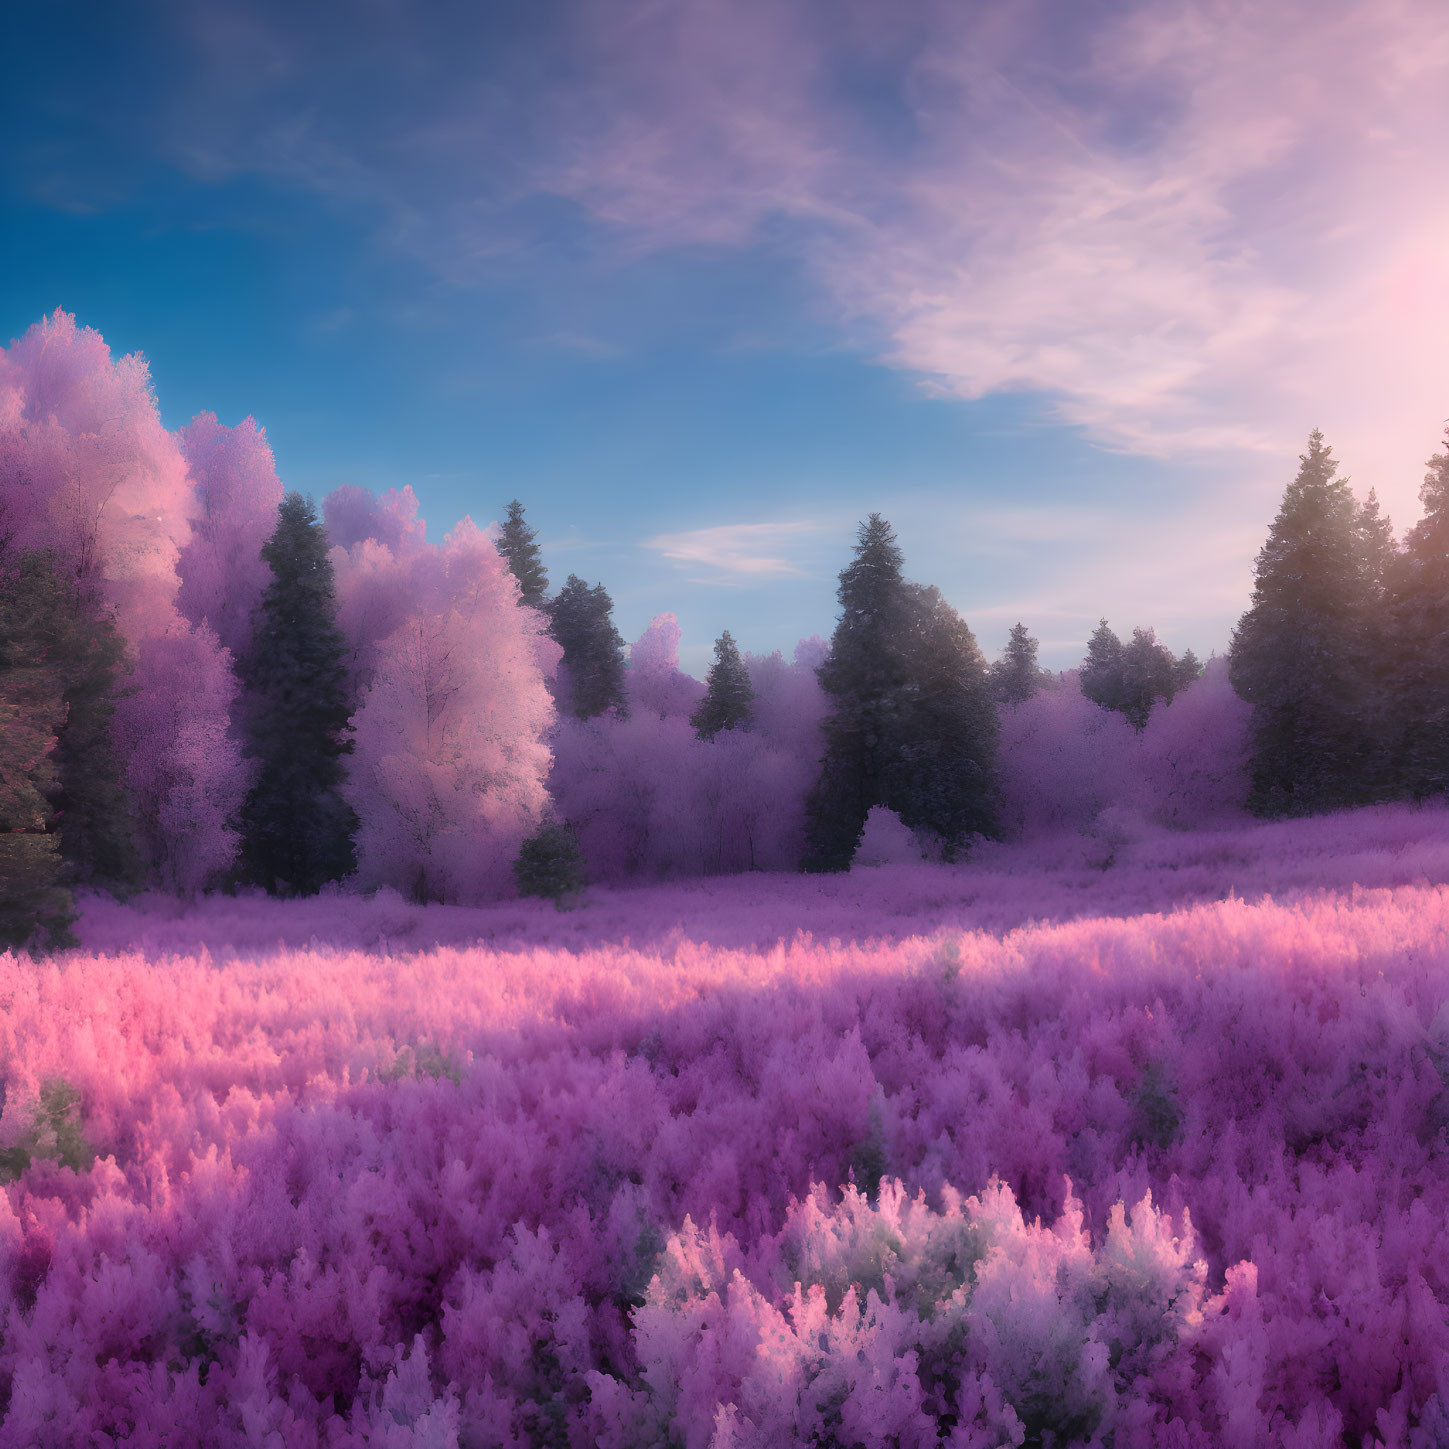 Vivid pink and purple flora under a soft blue sky landscape